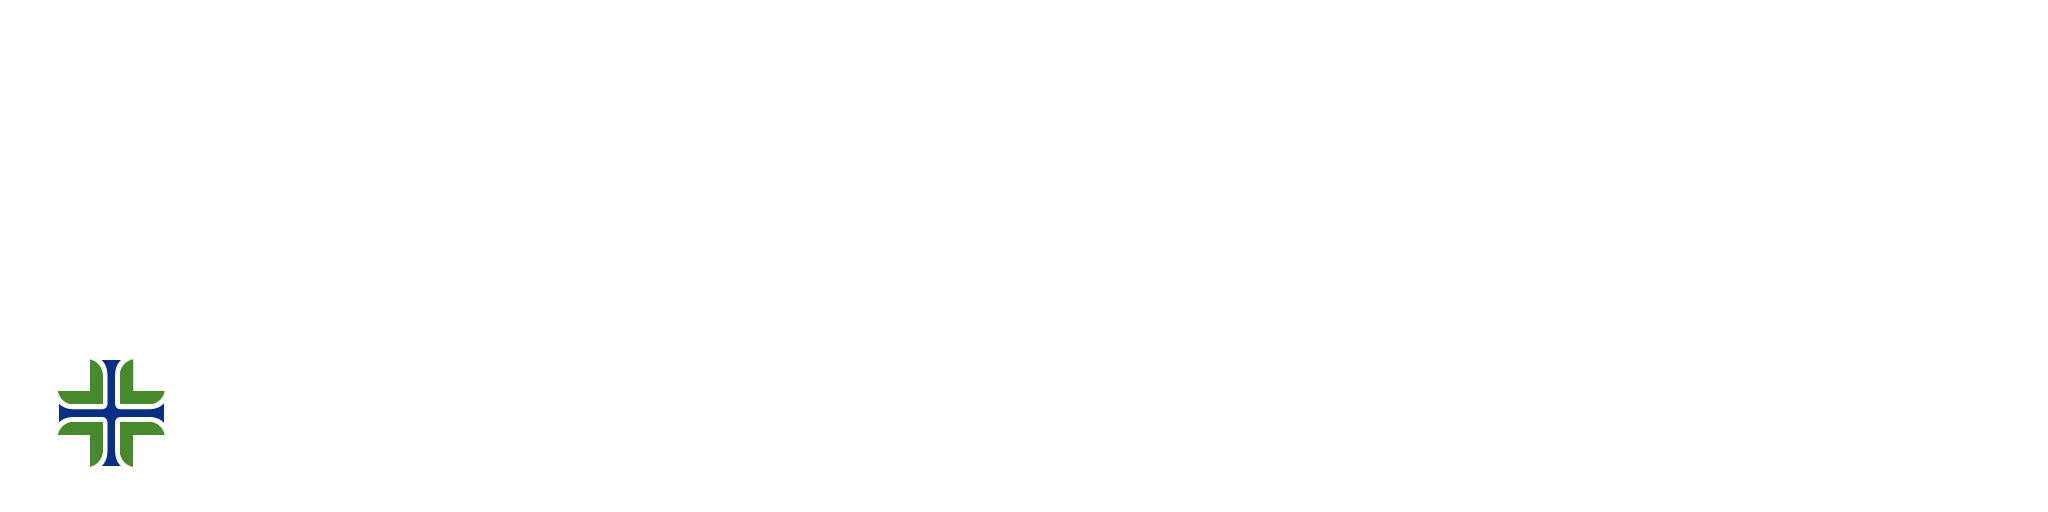 Saint John’s Cancer Institute